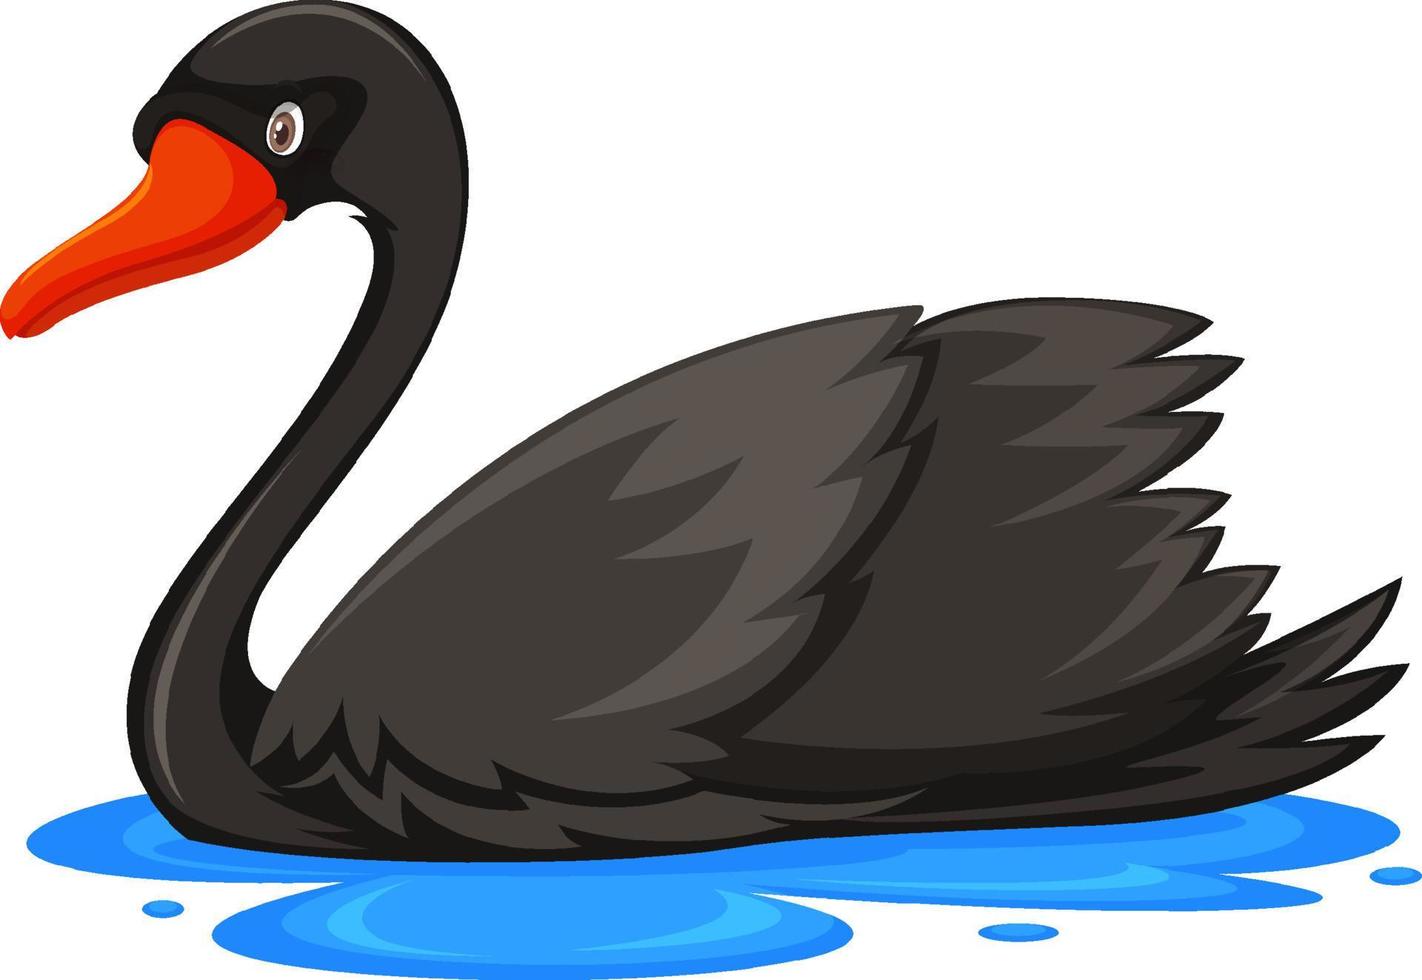 svart svan i tecknad stil vektor